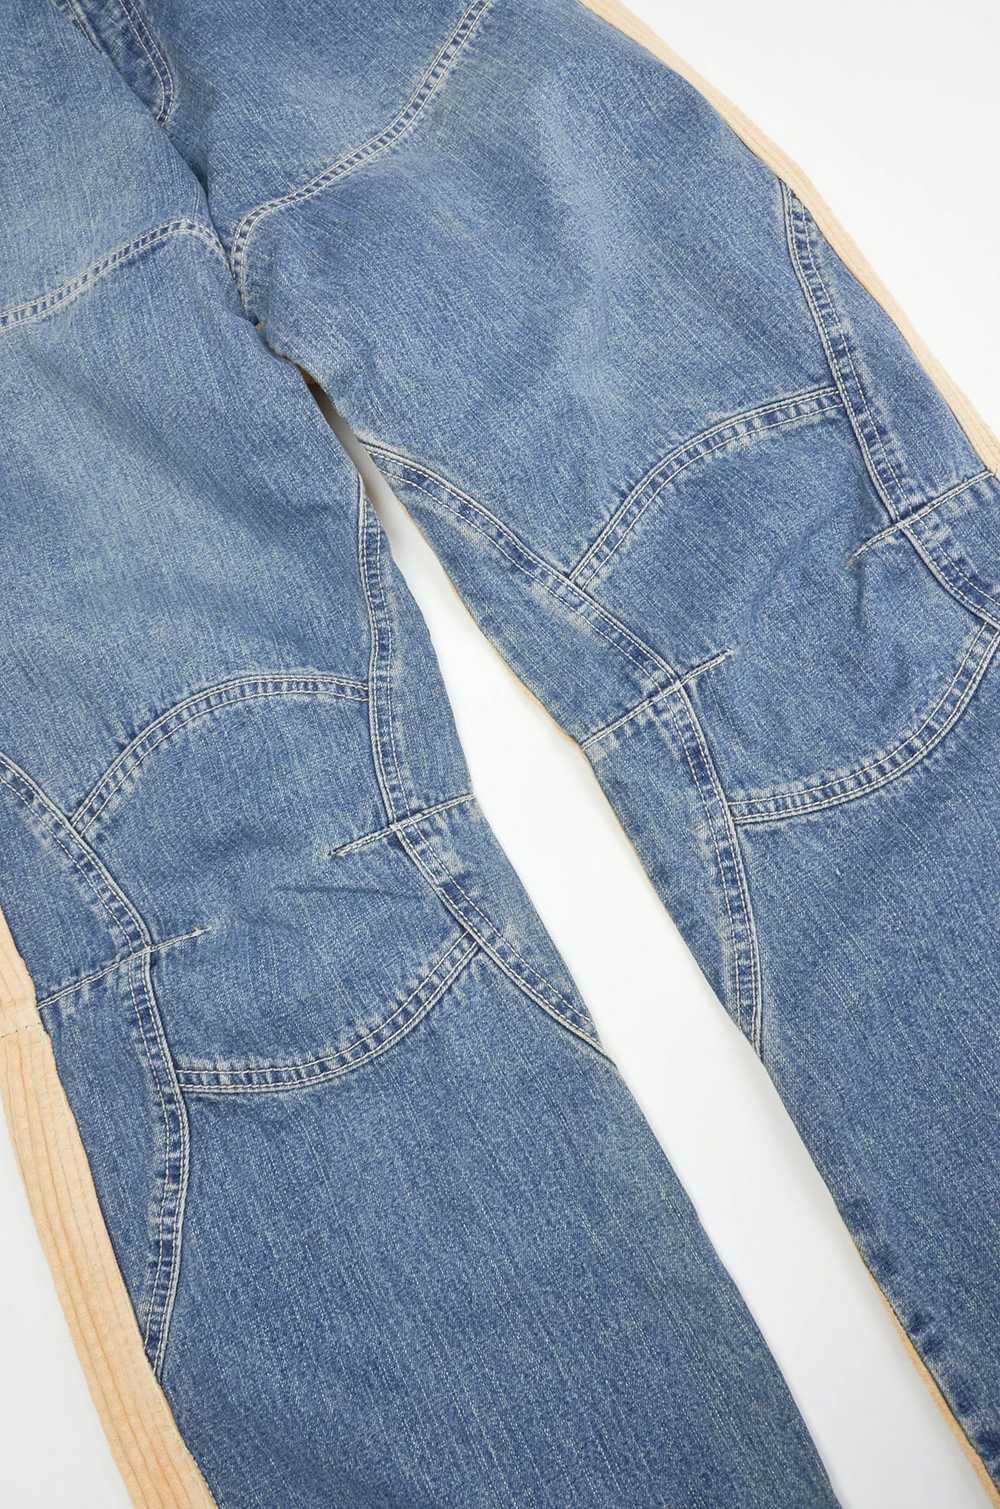 Jet Lag JET LAG Vintage Half Corduroy Jeans - image 11